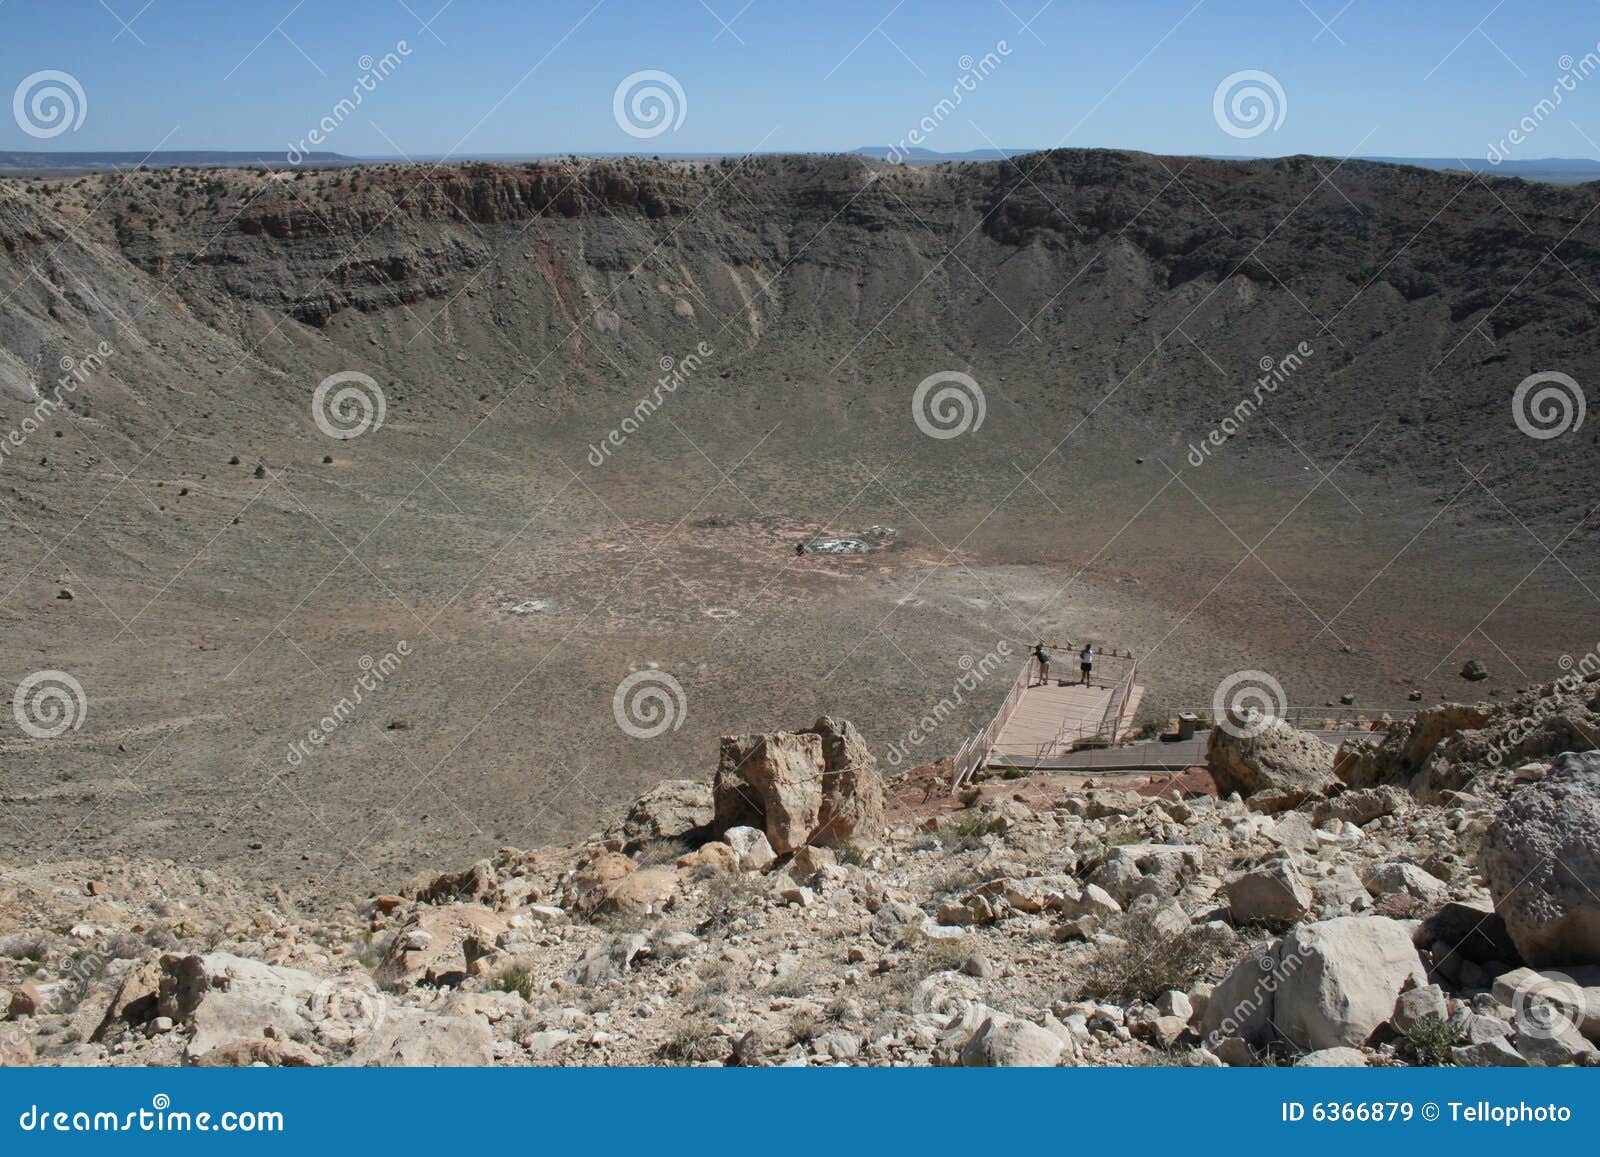 meteorite crater in arizona